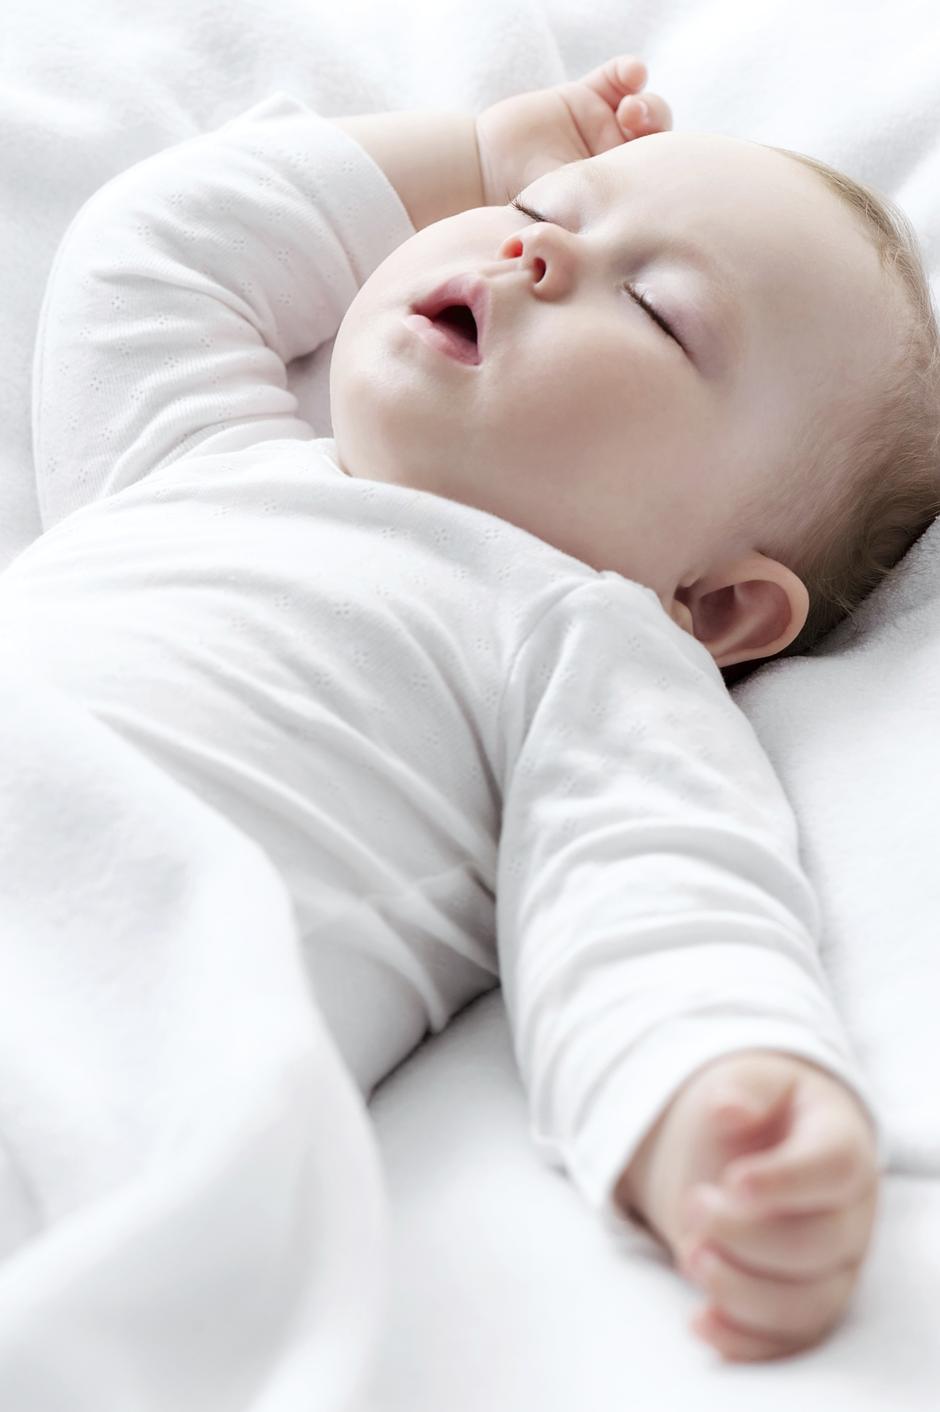 beba kolijevka san spavanje | Author: Thinkstock